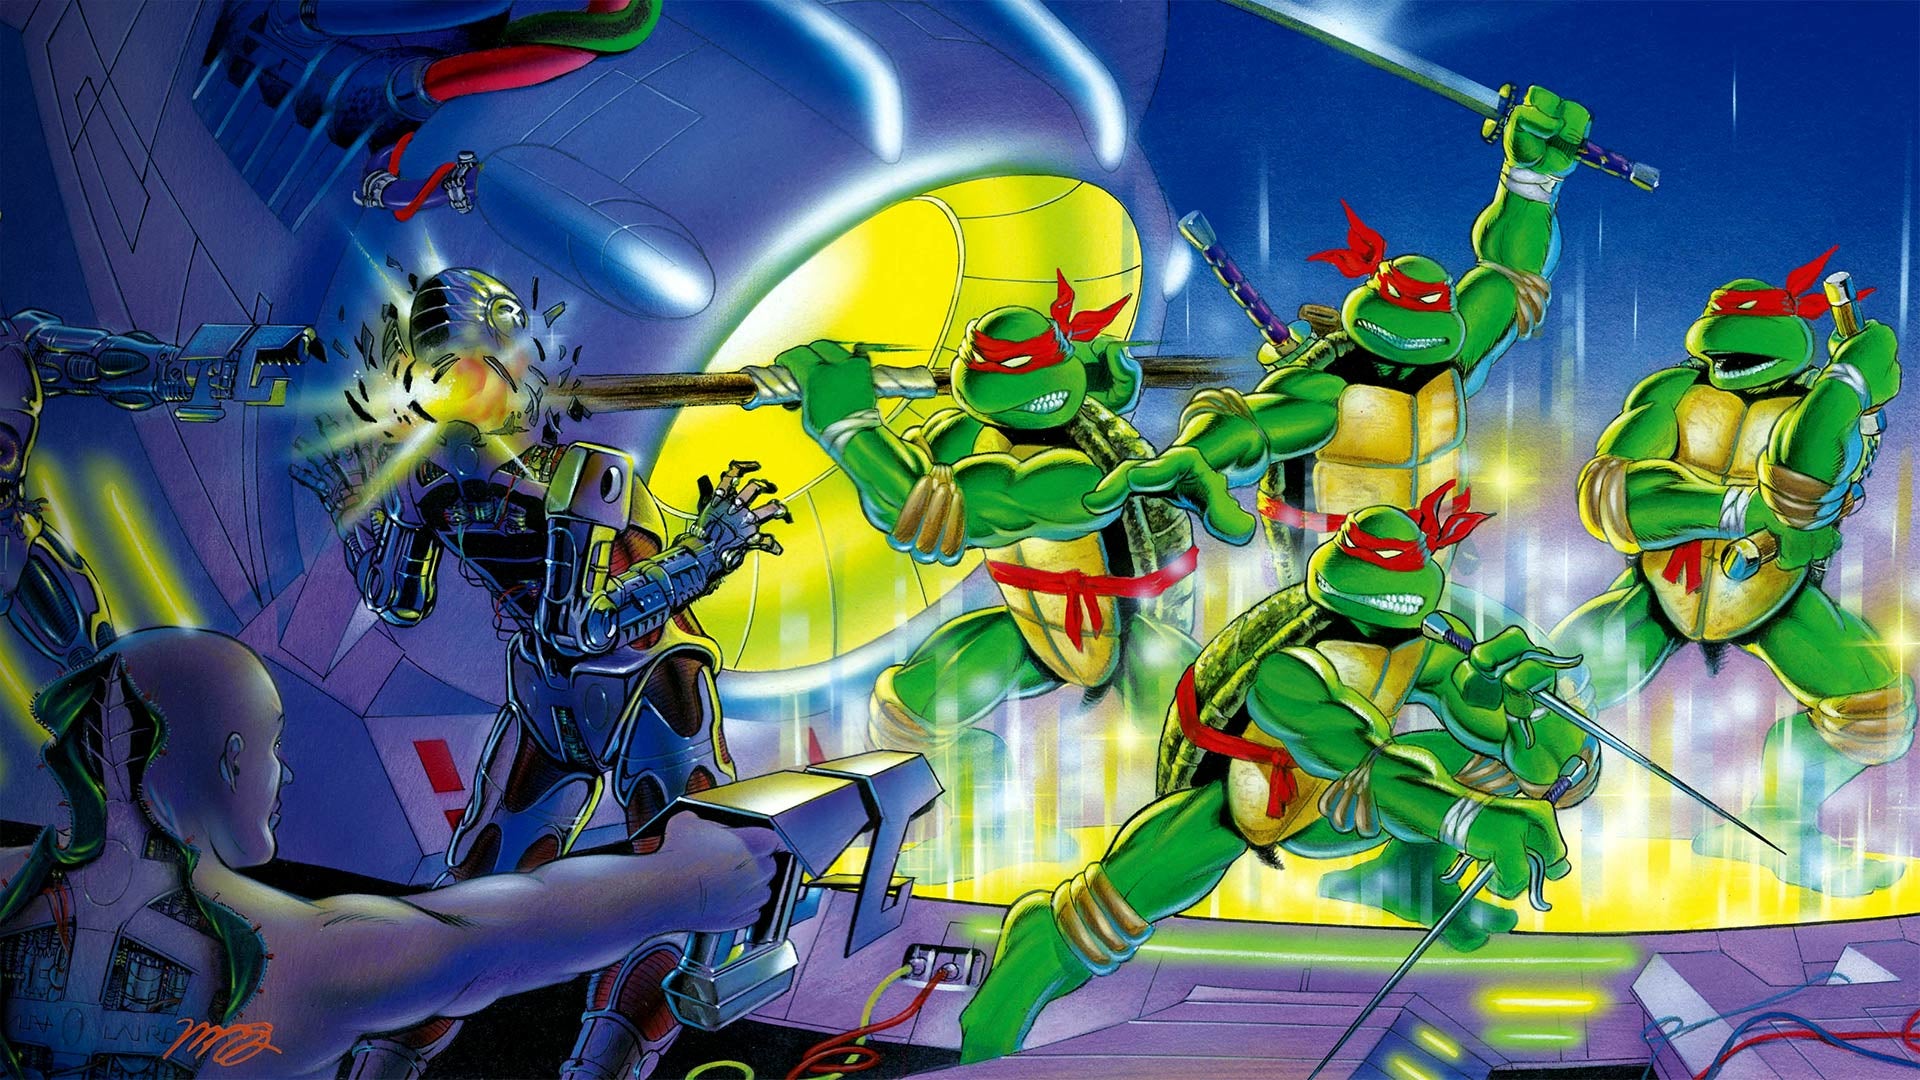 The Best Teenage Mutant Ninja Turtles Games - The Chozo Project